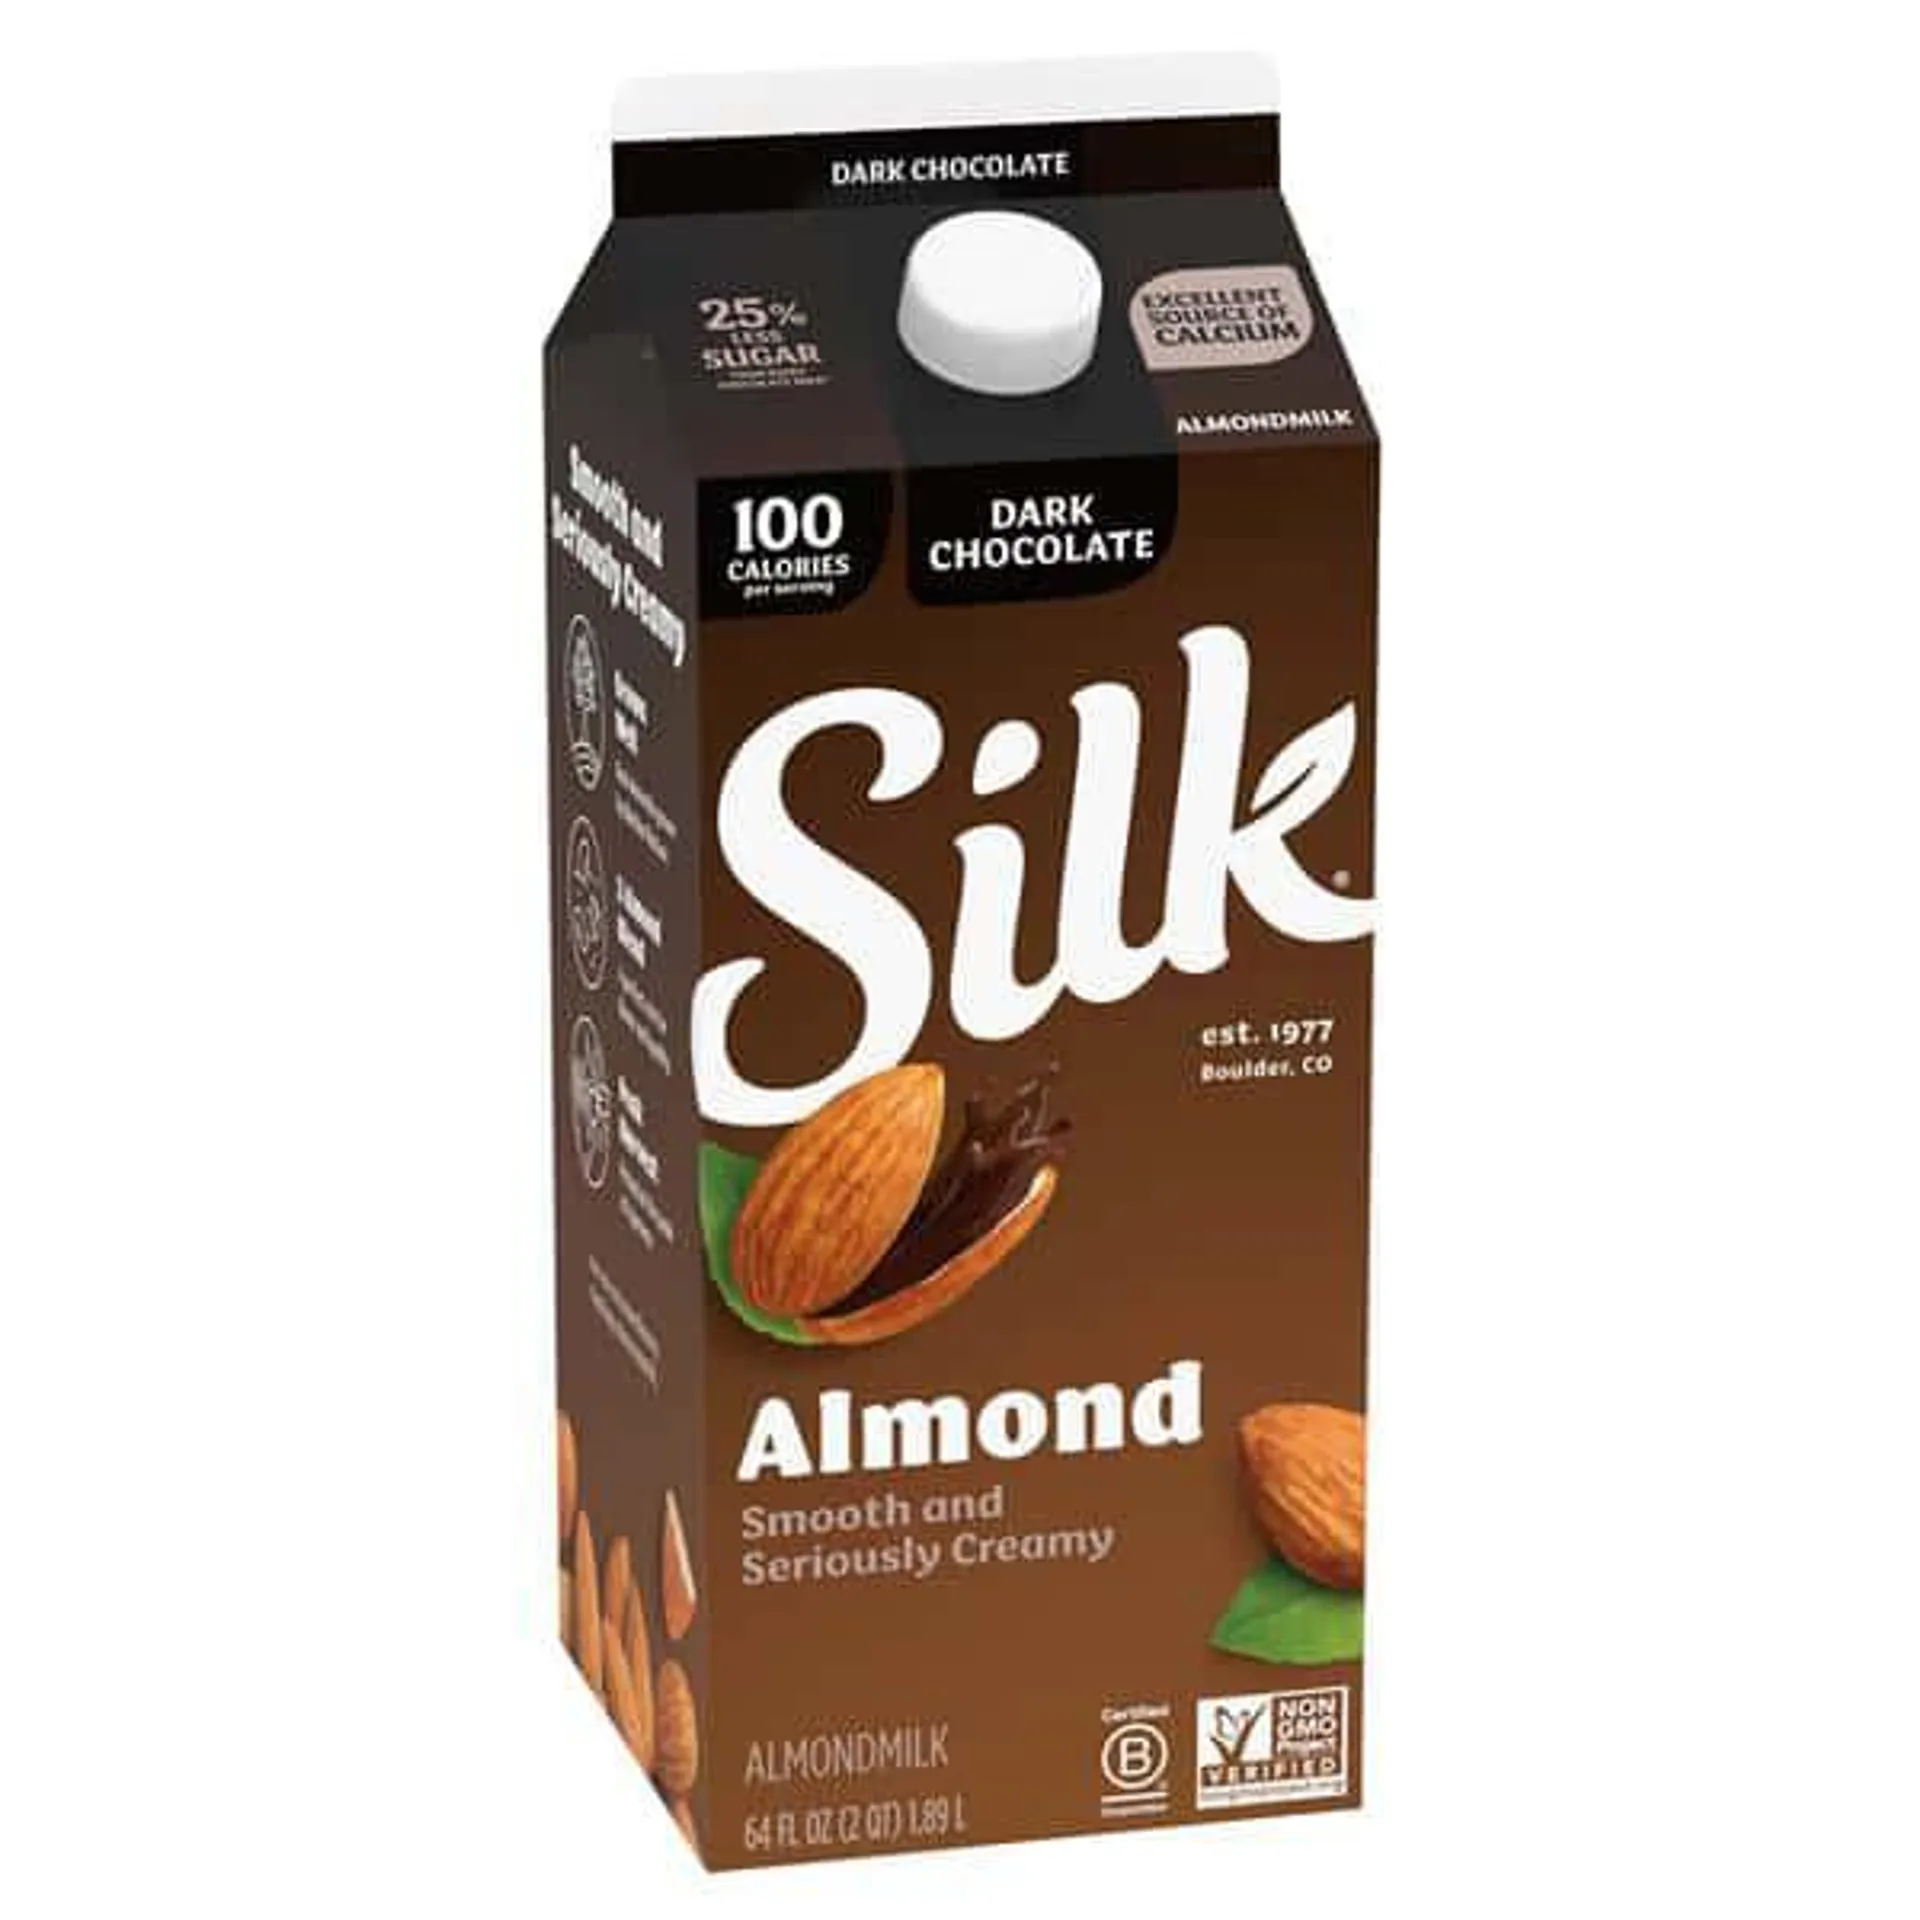 Silk Almond Dark Chocolate Milk